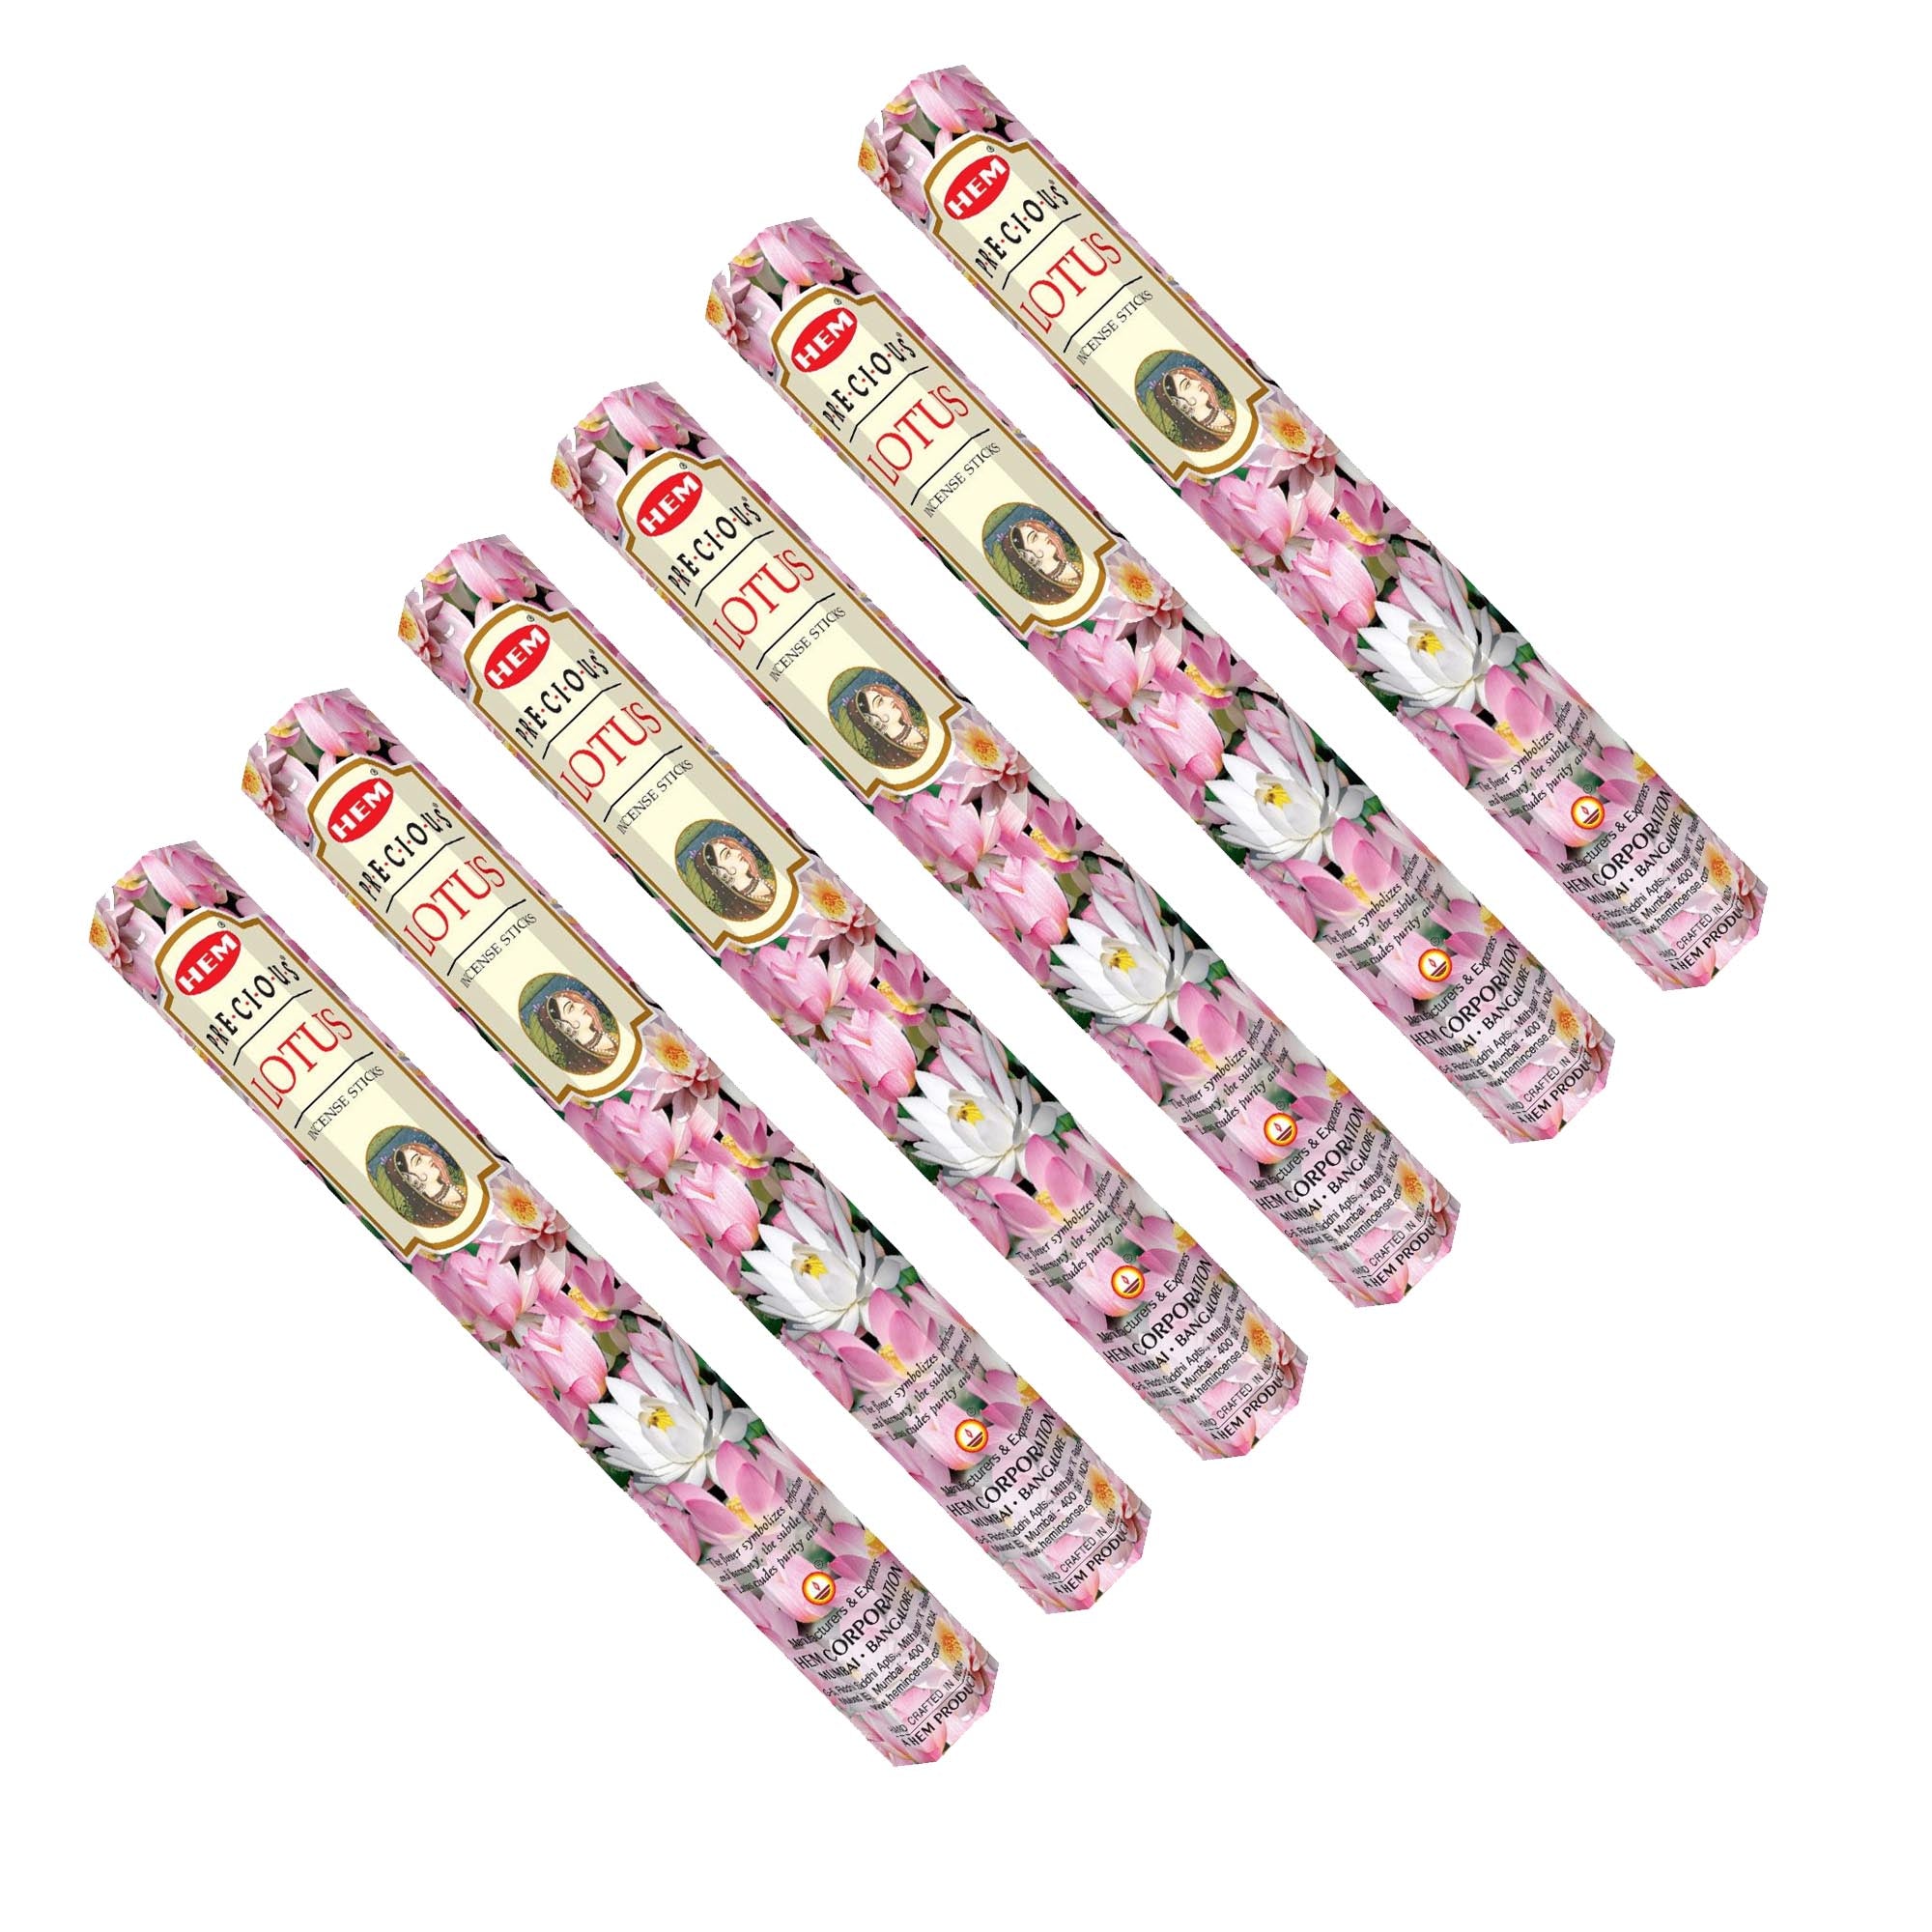 HEM - Hexagon - Precious Lotus Incense Sticks